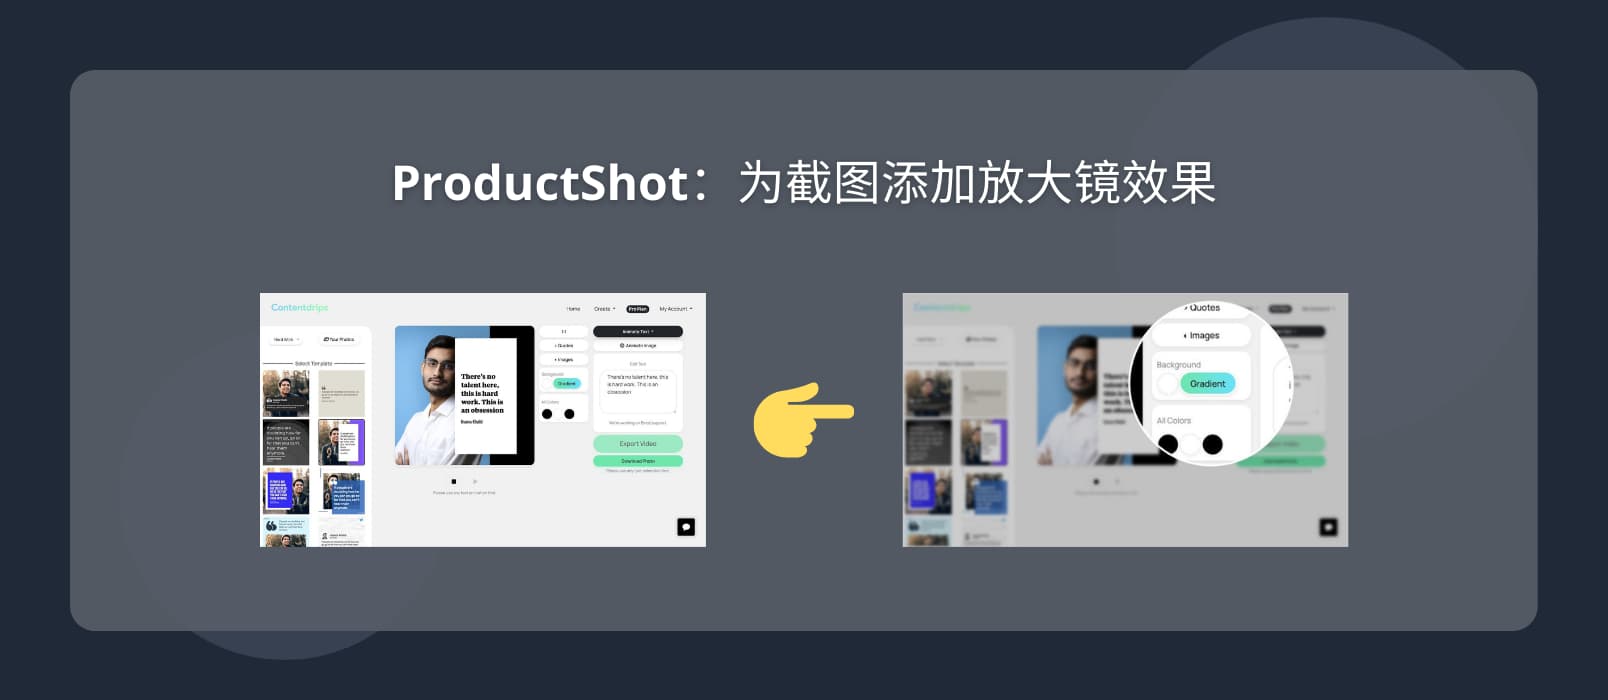 ProductShot - 为截图添加放大镜效果[Web]